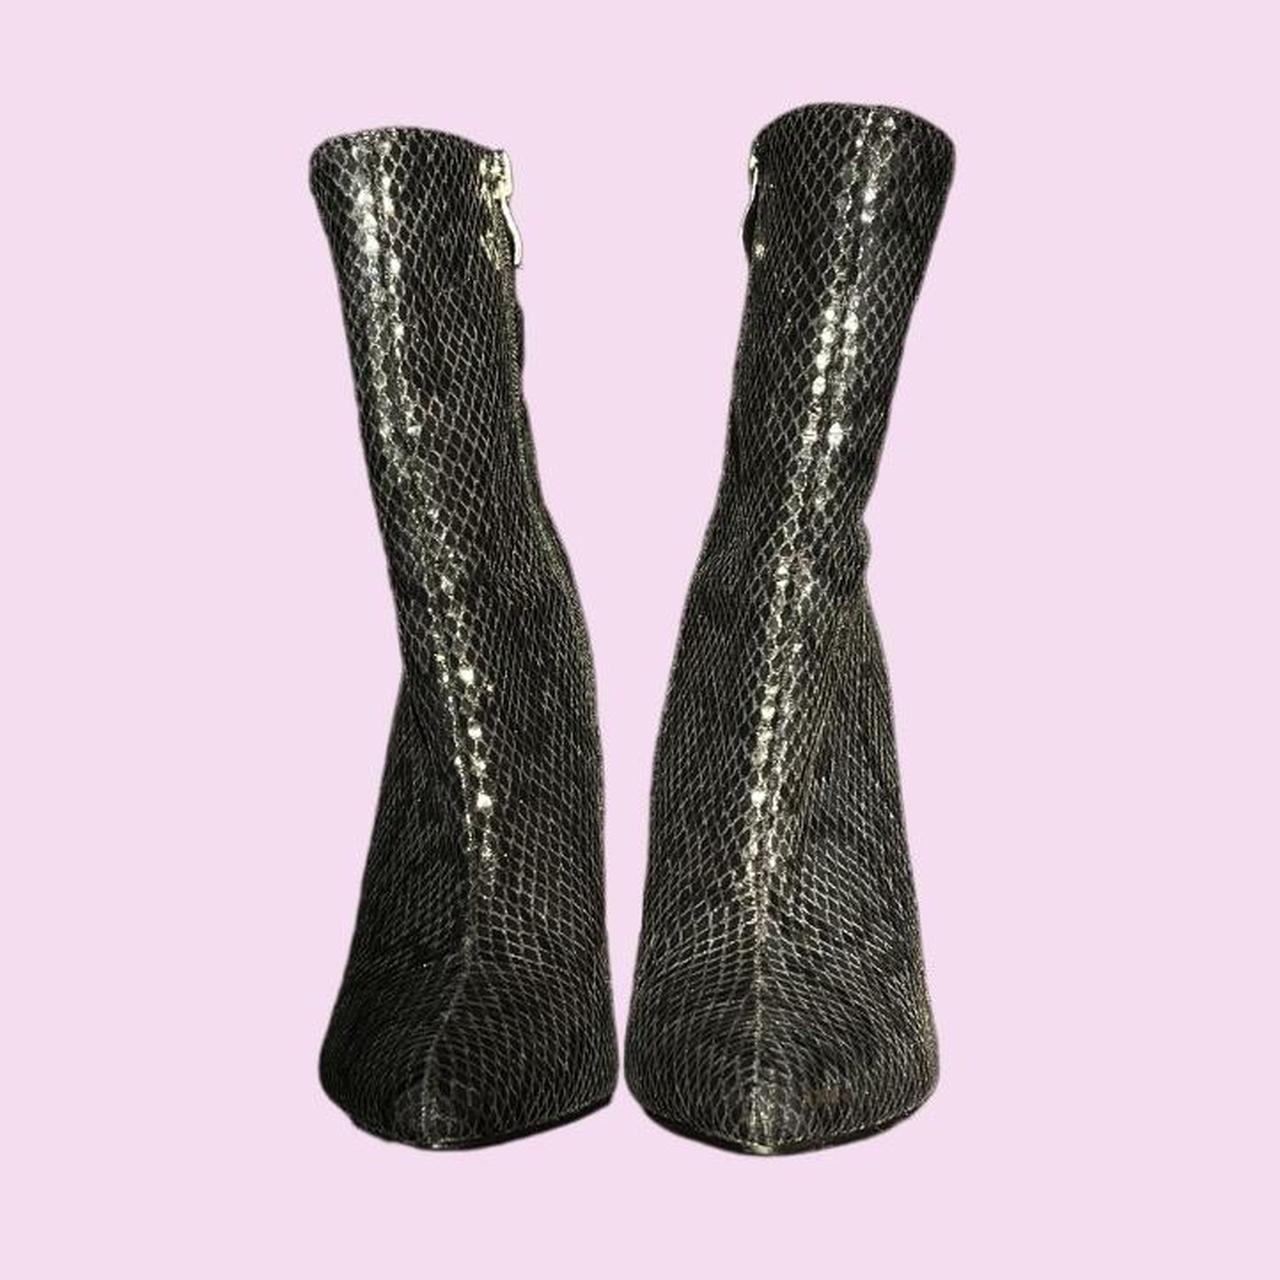 Chic Women's Black Boots (2)